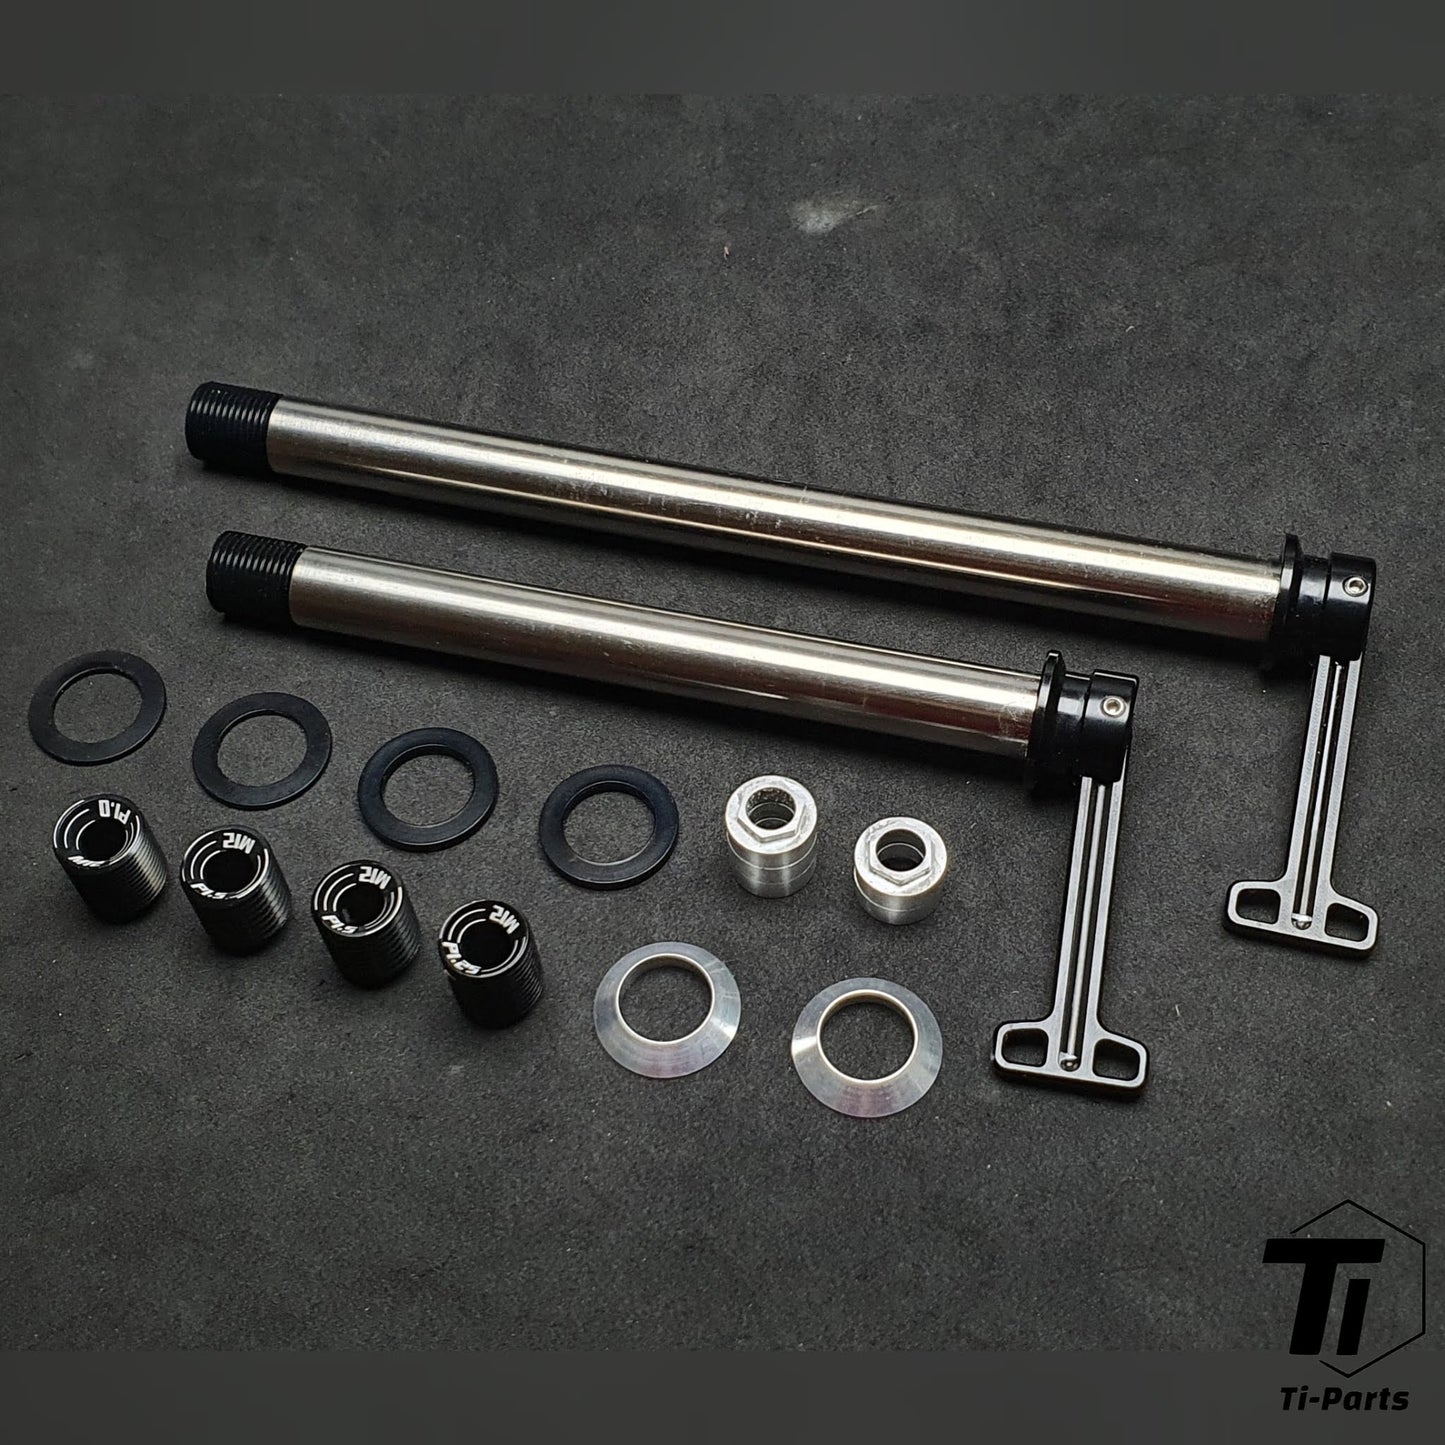 Titanium Thru Axle for Roadbike Disc Brake | 12mm Super Aero lightweight axle with built-in Hidden QR Quick Release